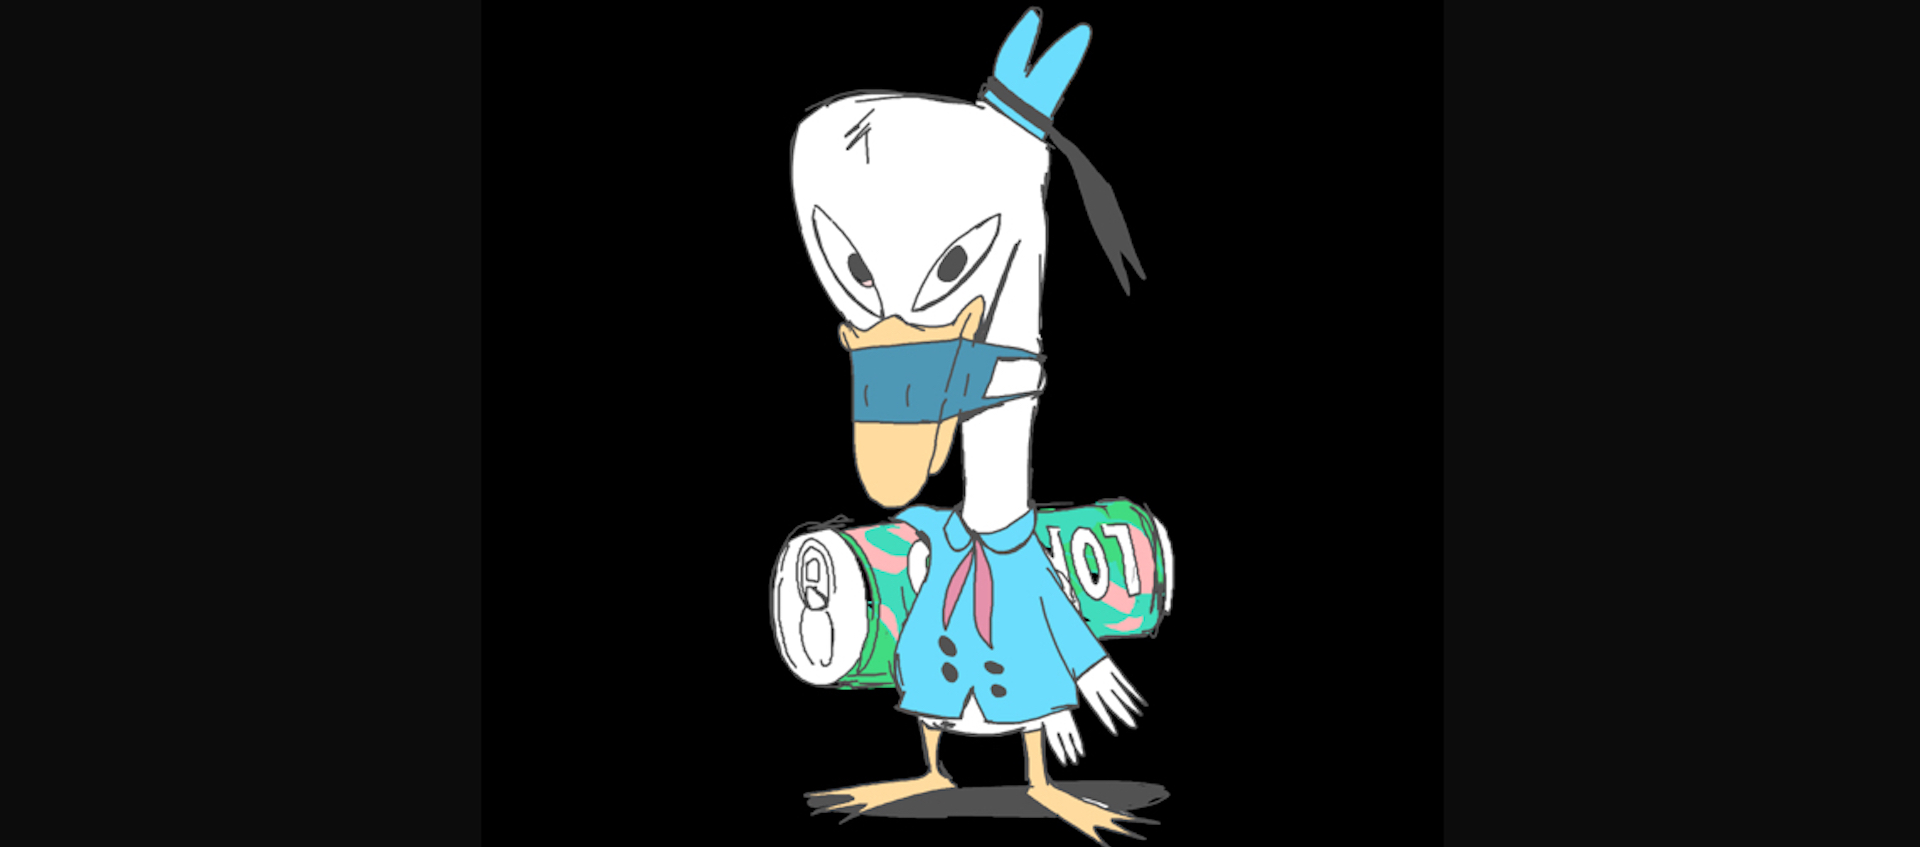 Donald Duck illustration by Malt Adult animation programmer Sarah Schmidt